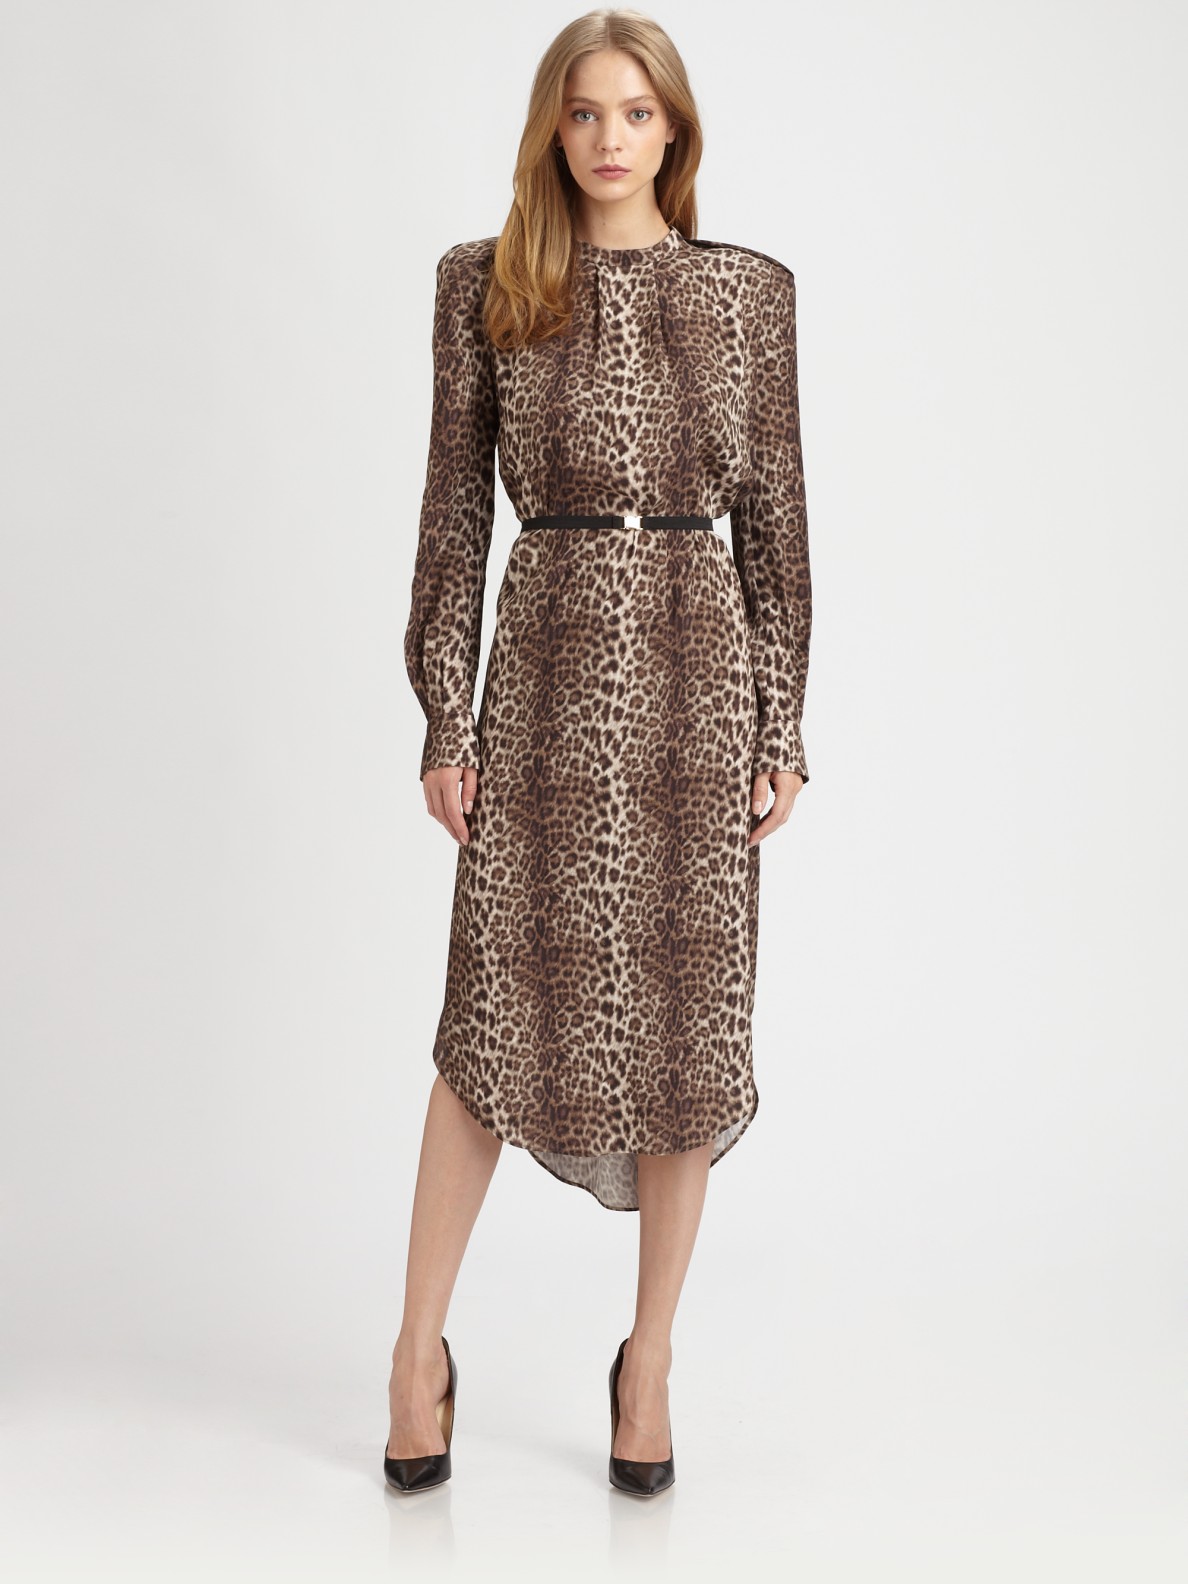 Lyst - By Malene Birger Belted Leopard-Print Dress in Brown